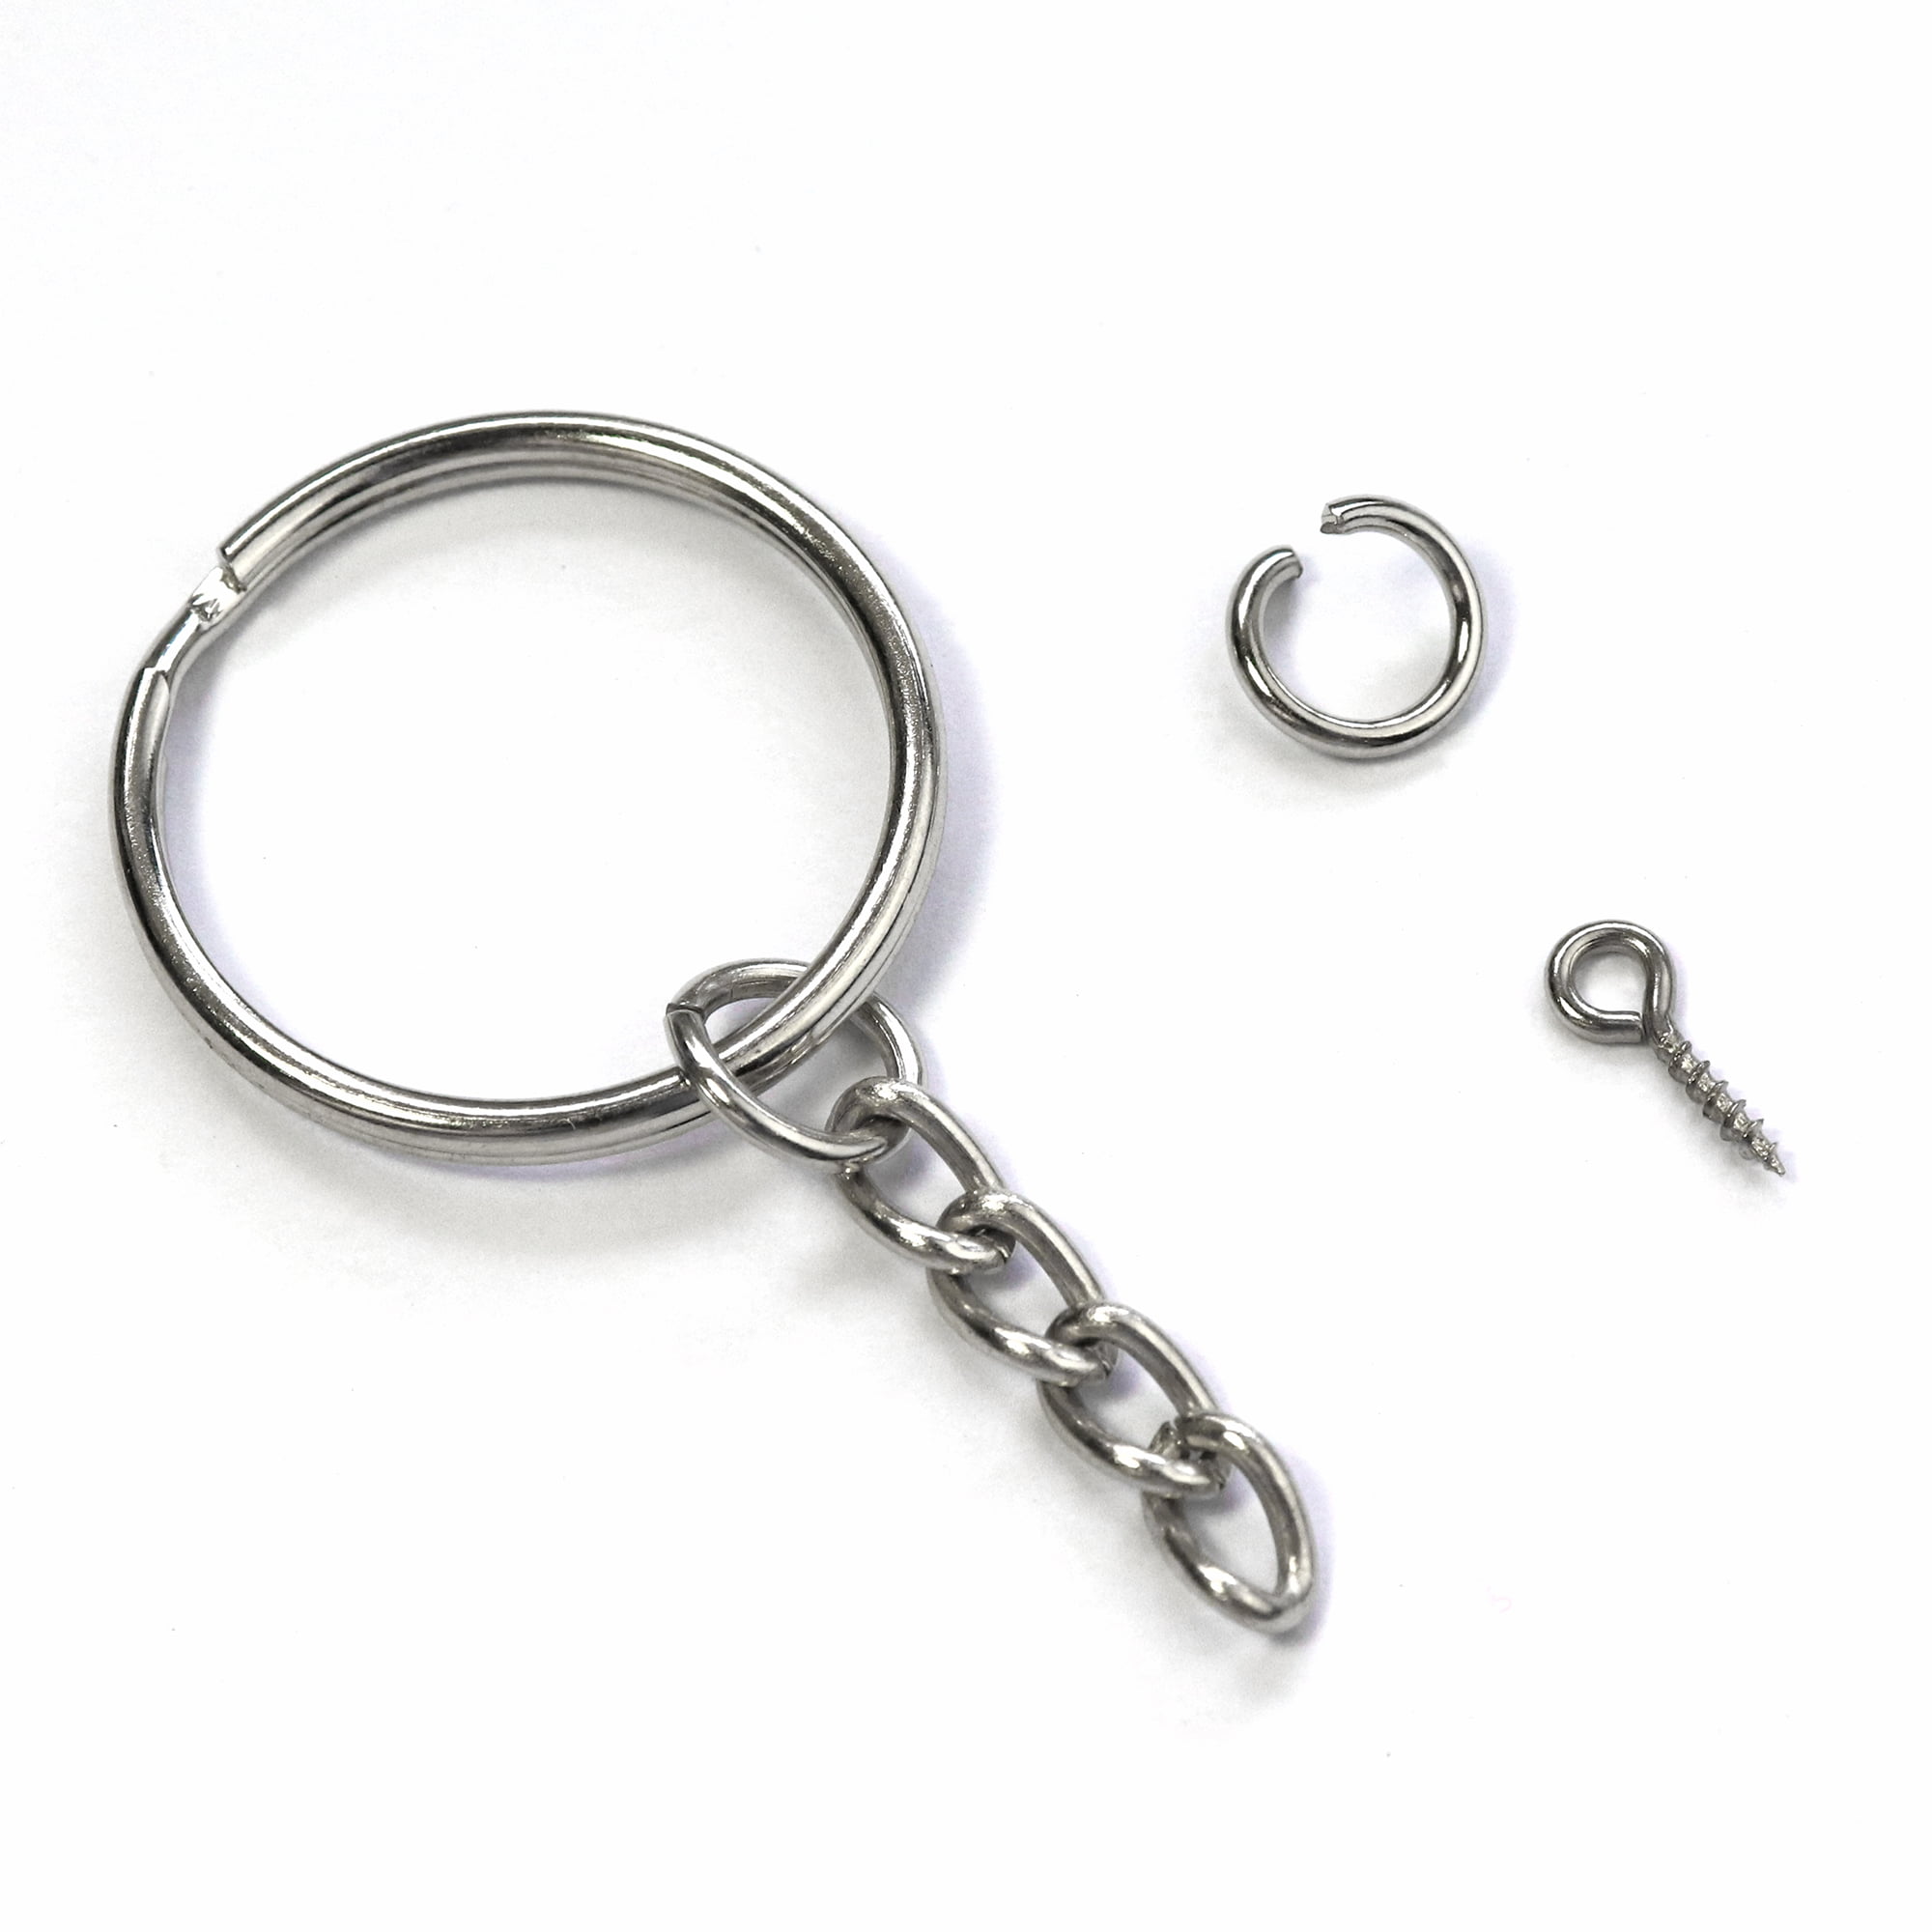 Unique Bargains 100pcs 12mm Diameter Split Key Ring Chain Keyring Keychain Loop, Adult Unisex, Size: 12mm/0.47 inch, Silver